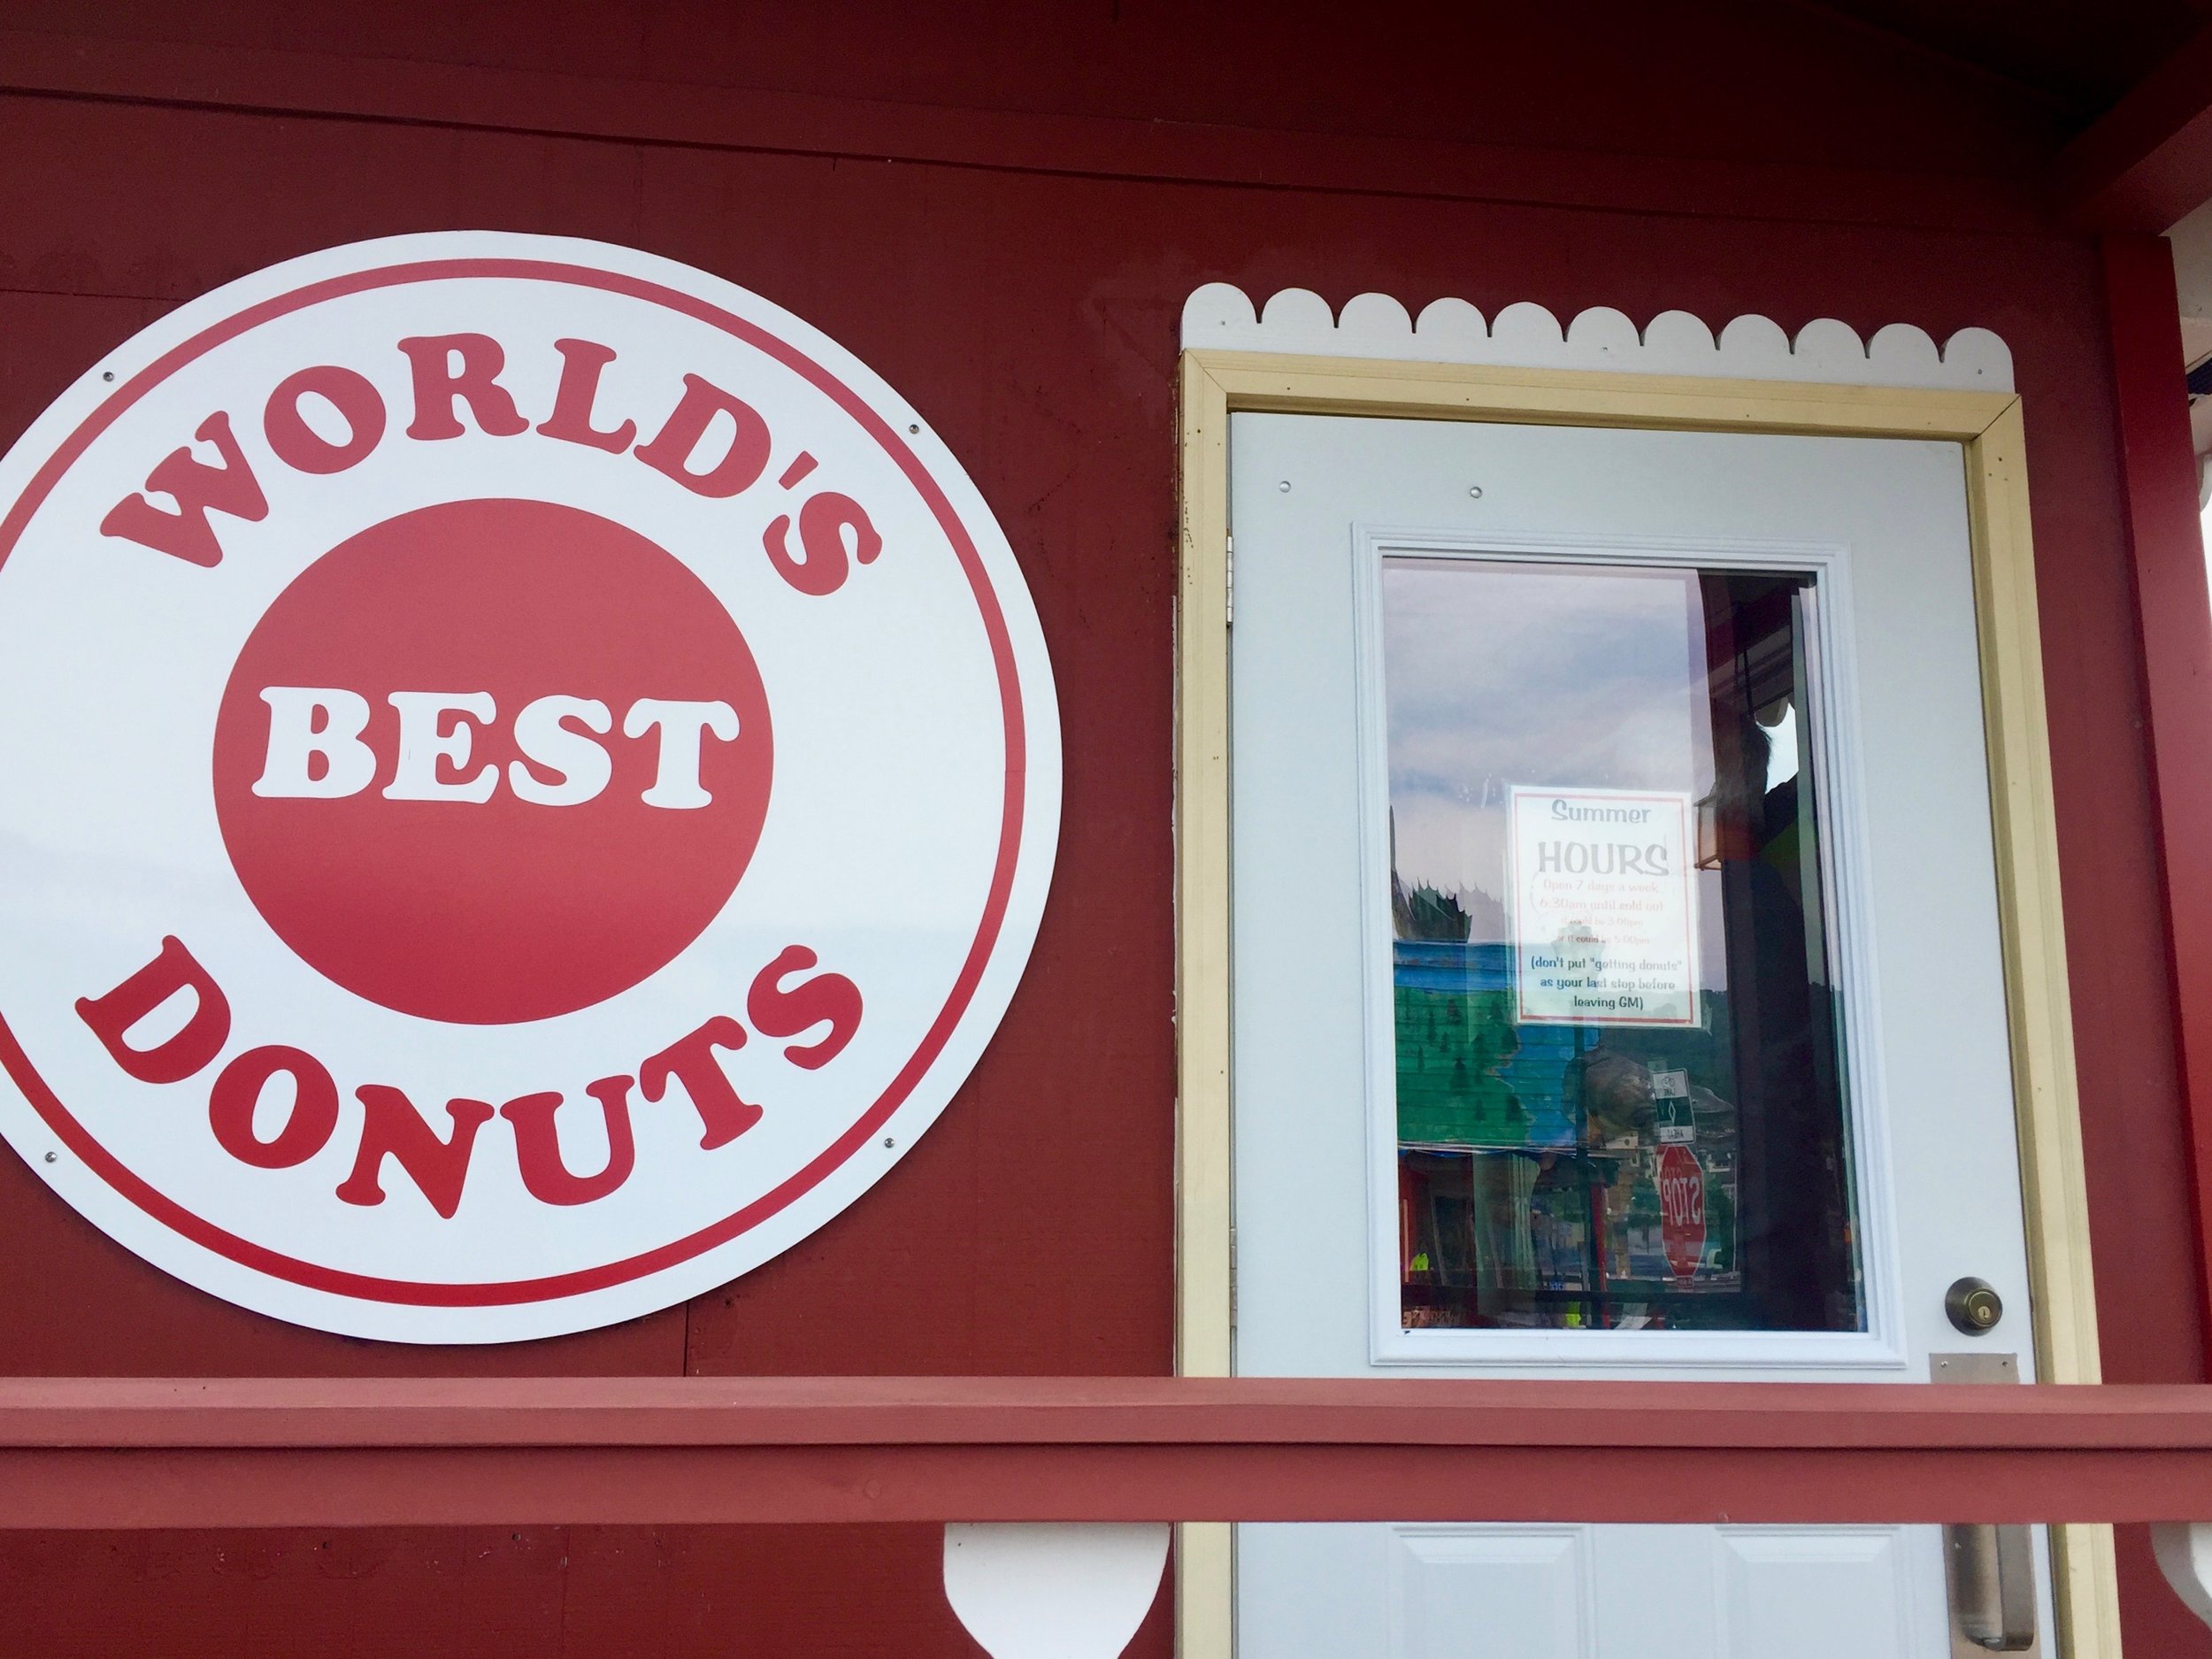 World's Best Donuts Storefront.jpg